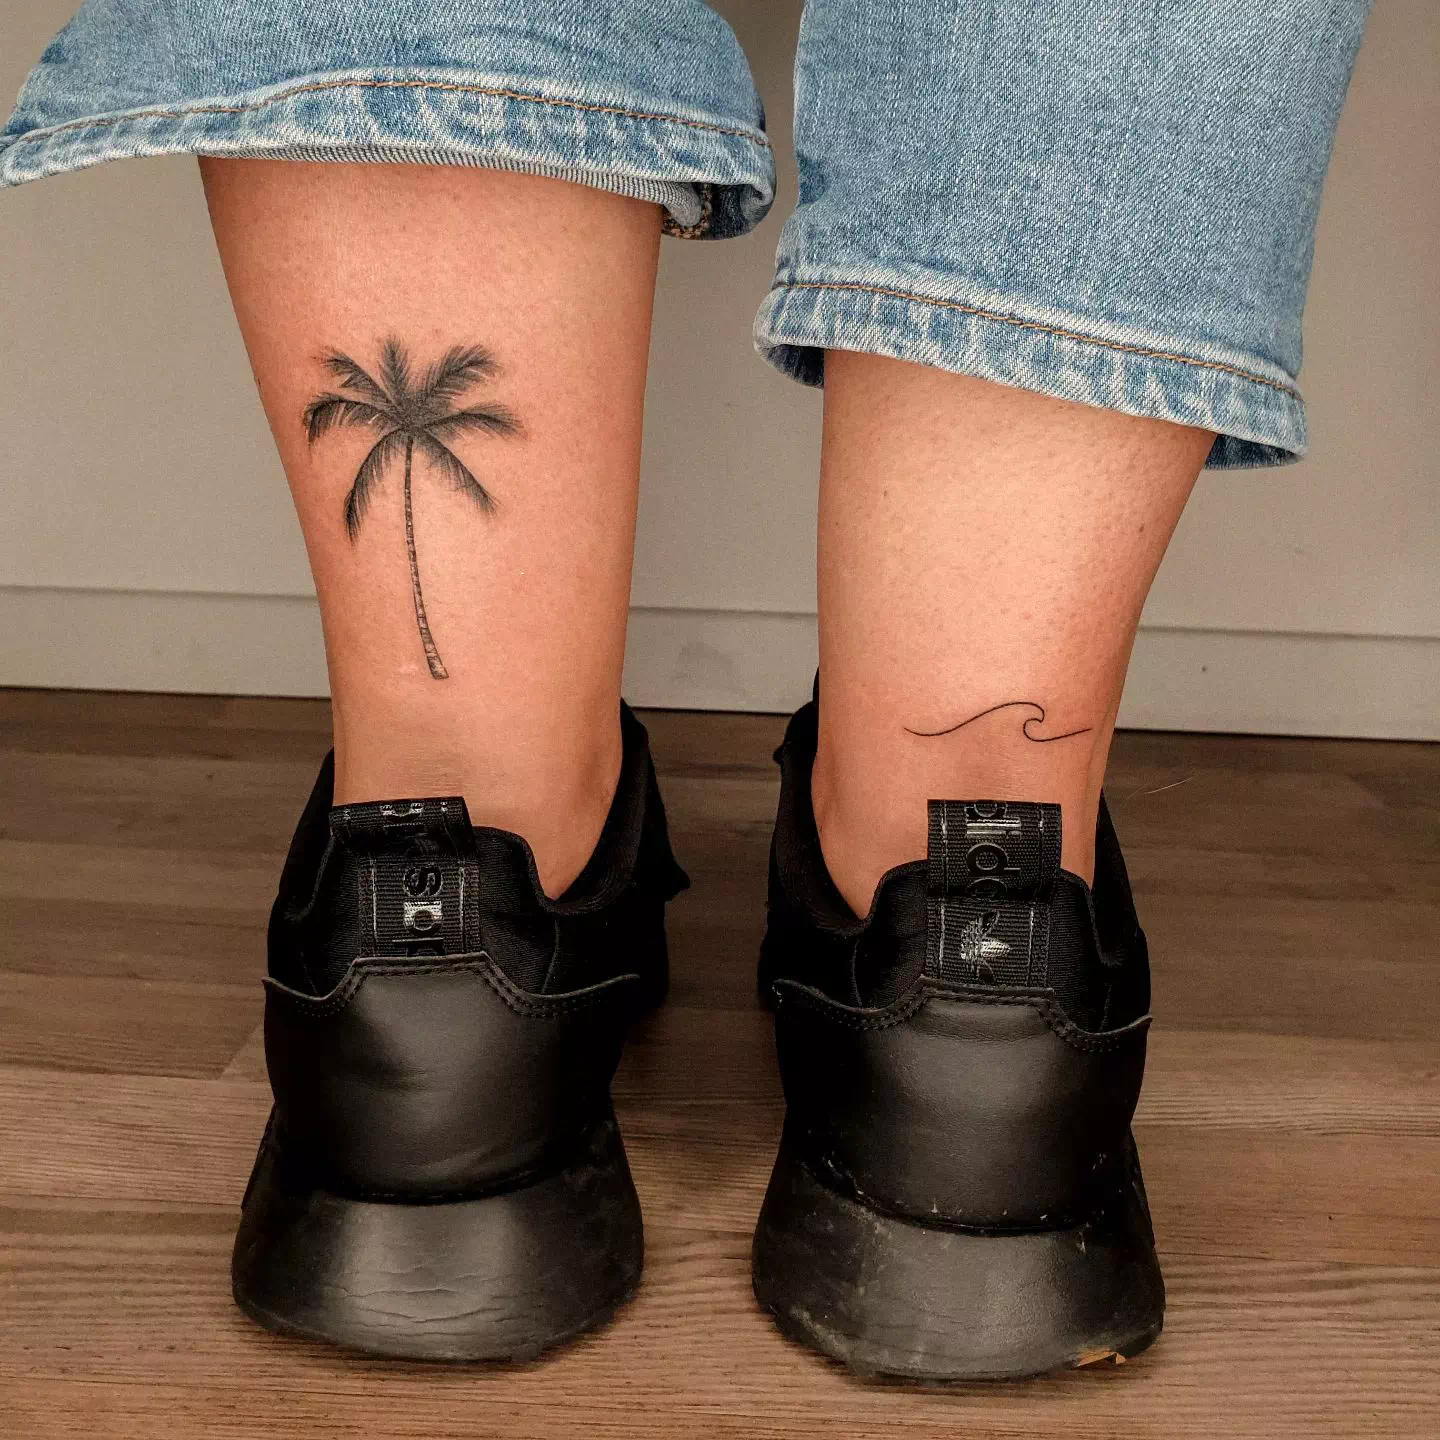 Palm Tree Tattoo On Ankle 2